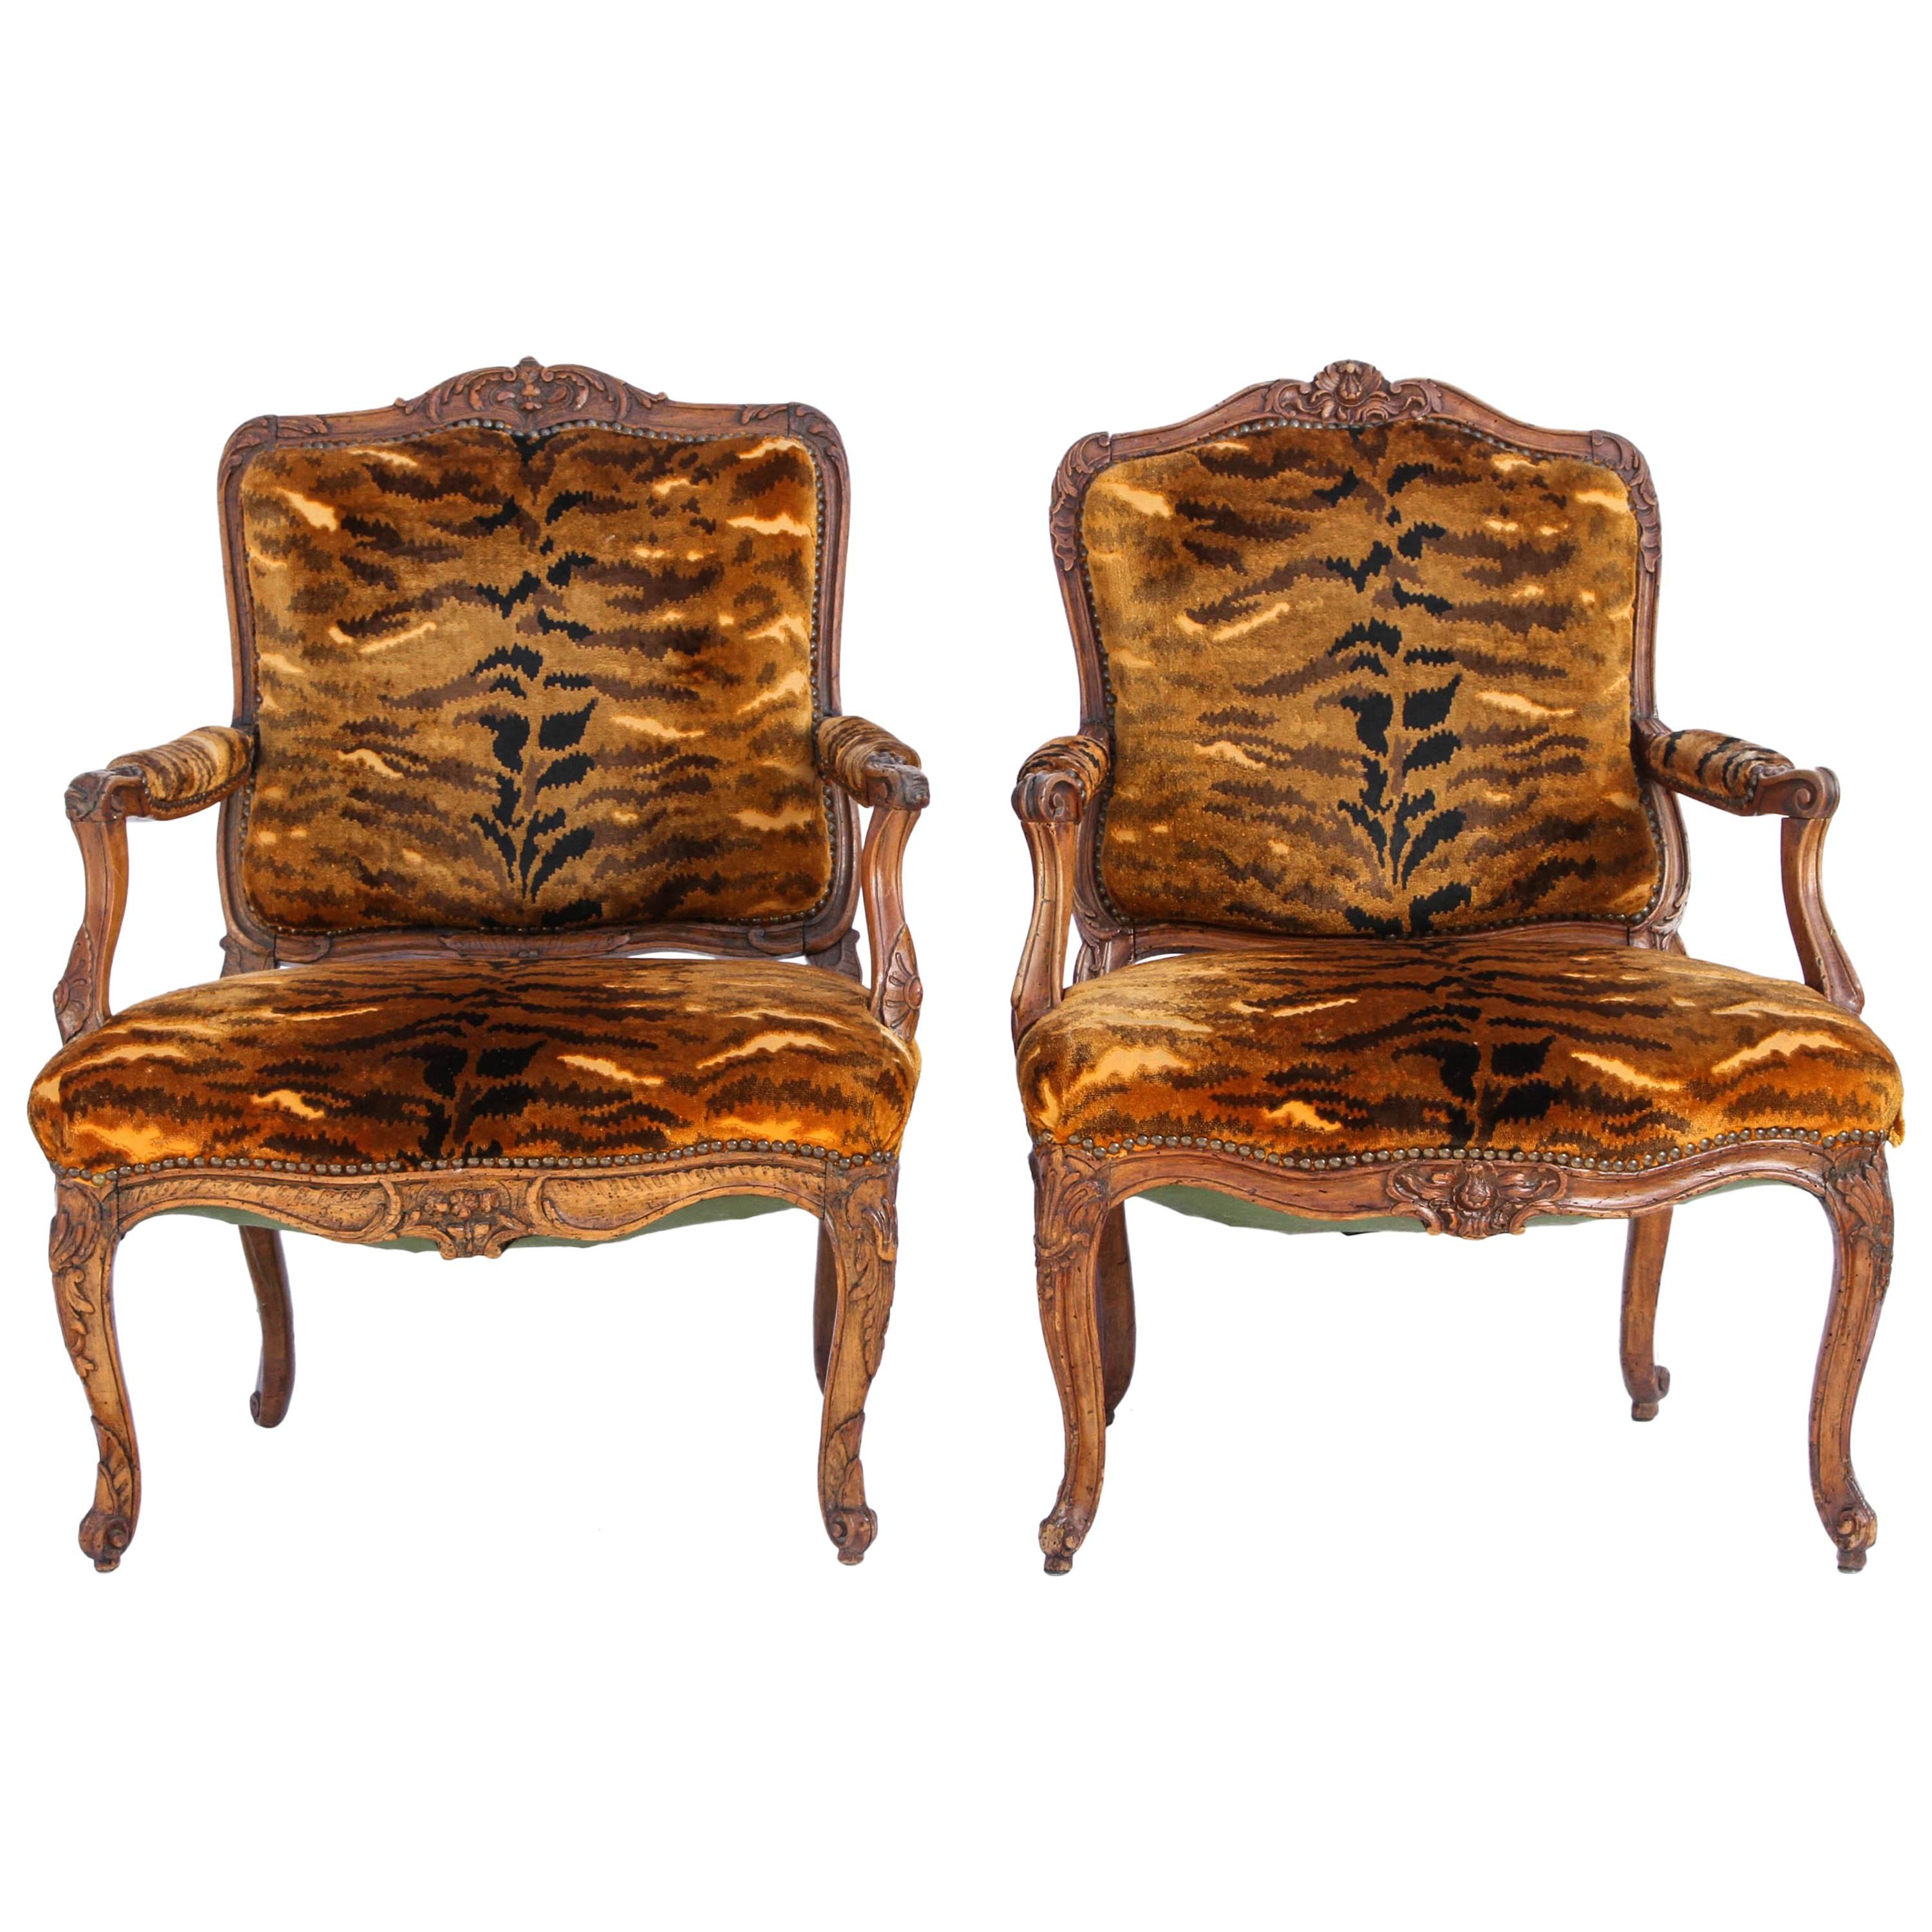 Similar Pair of 18th Century French Regence Walnut Armchairs